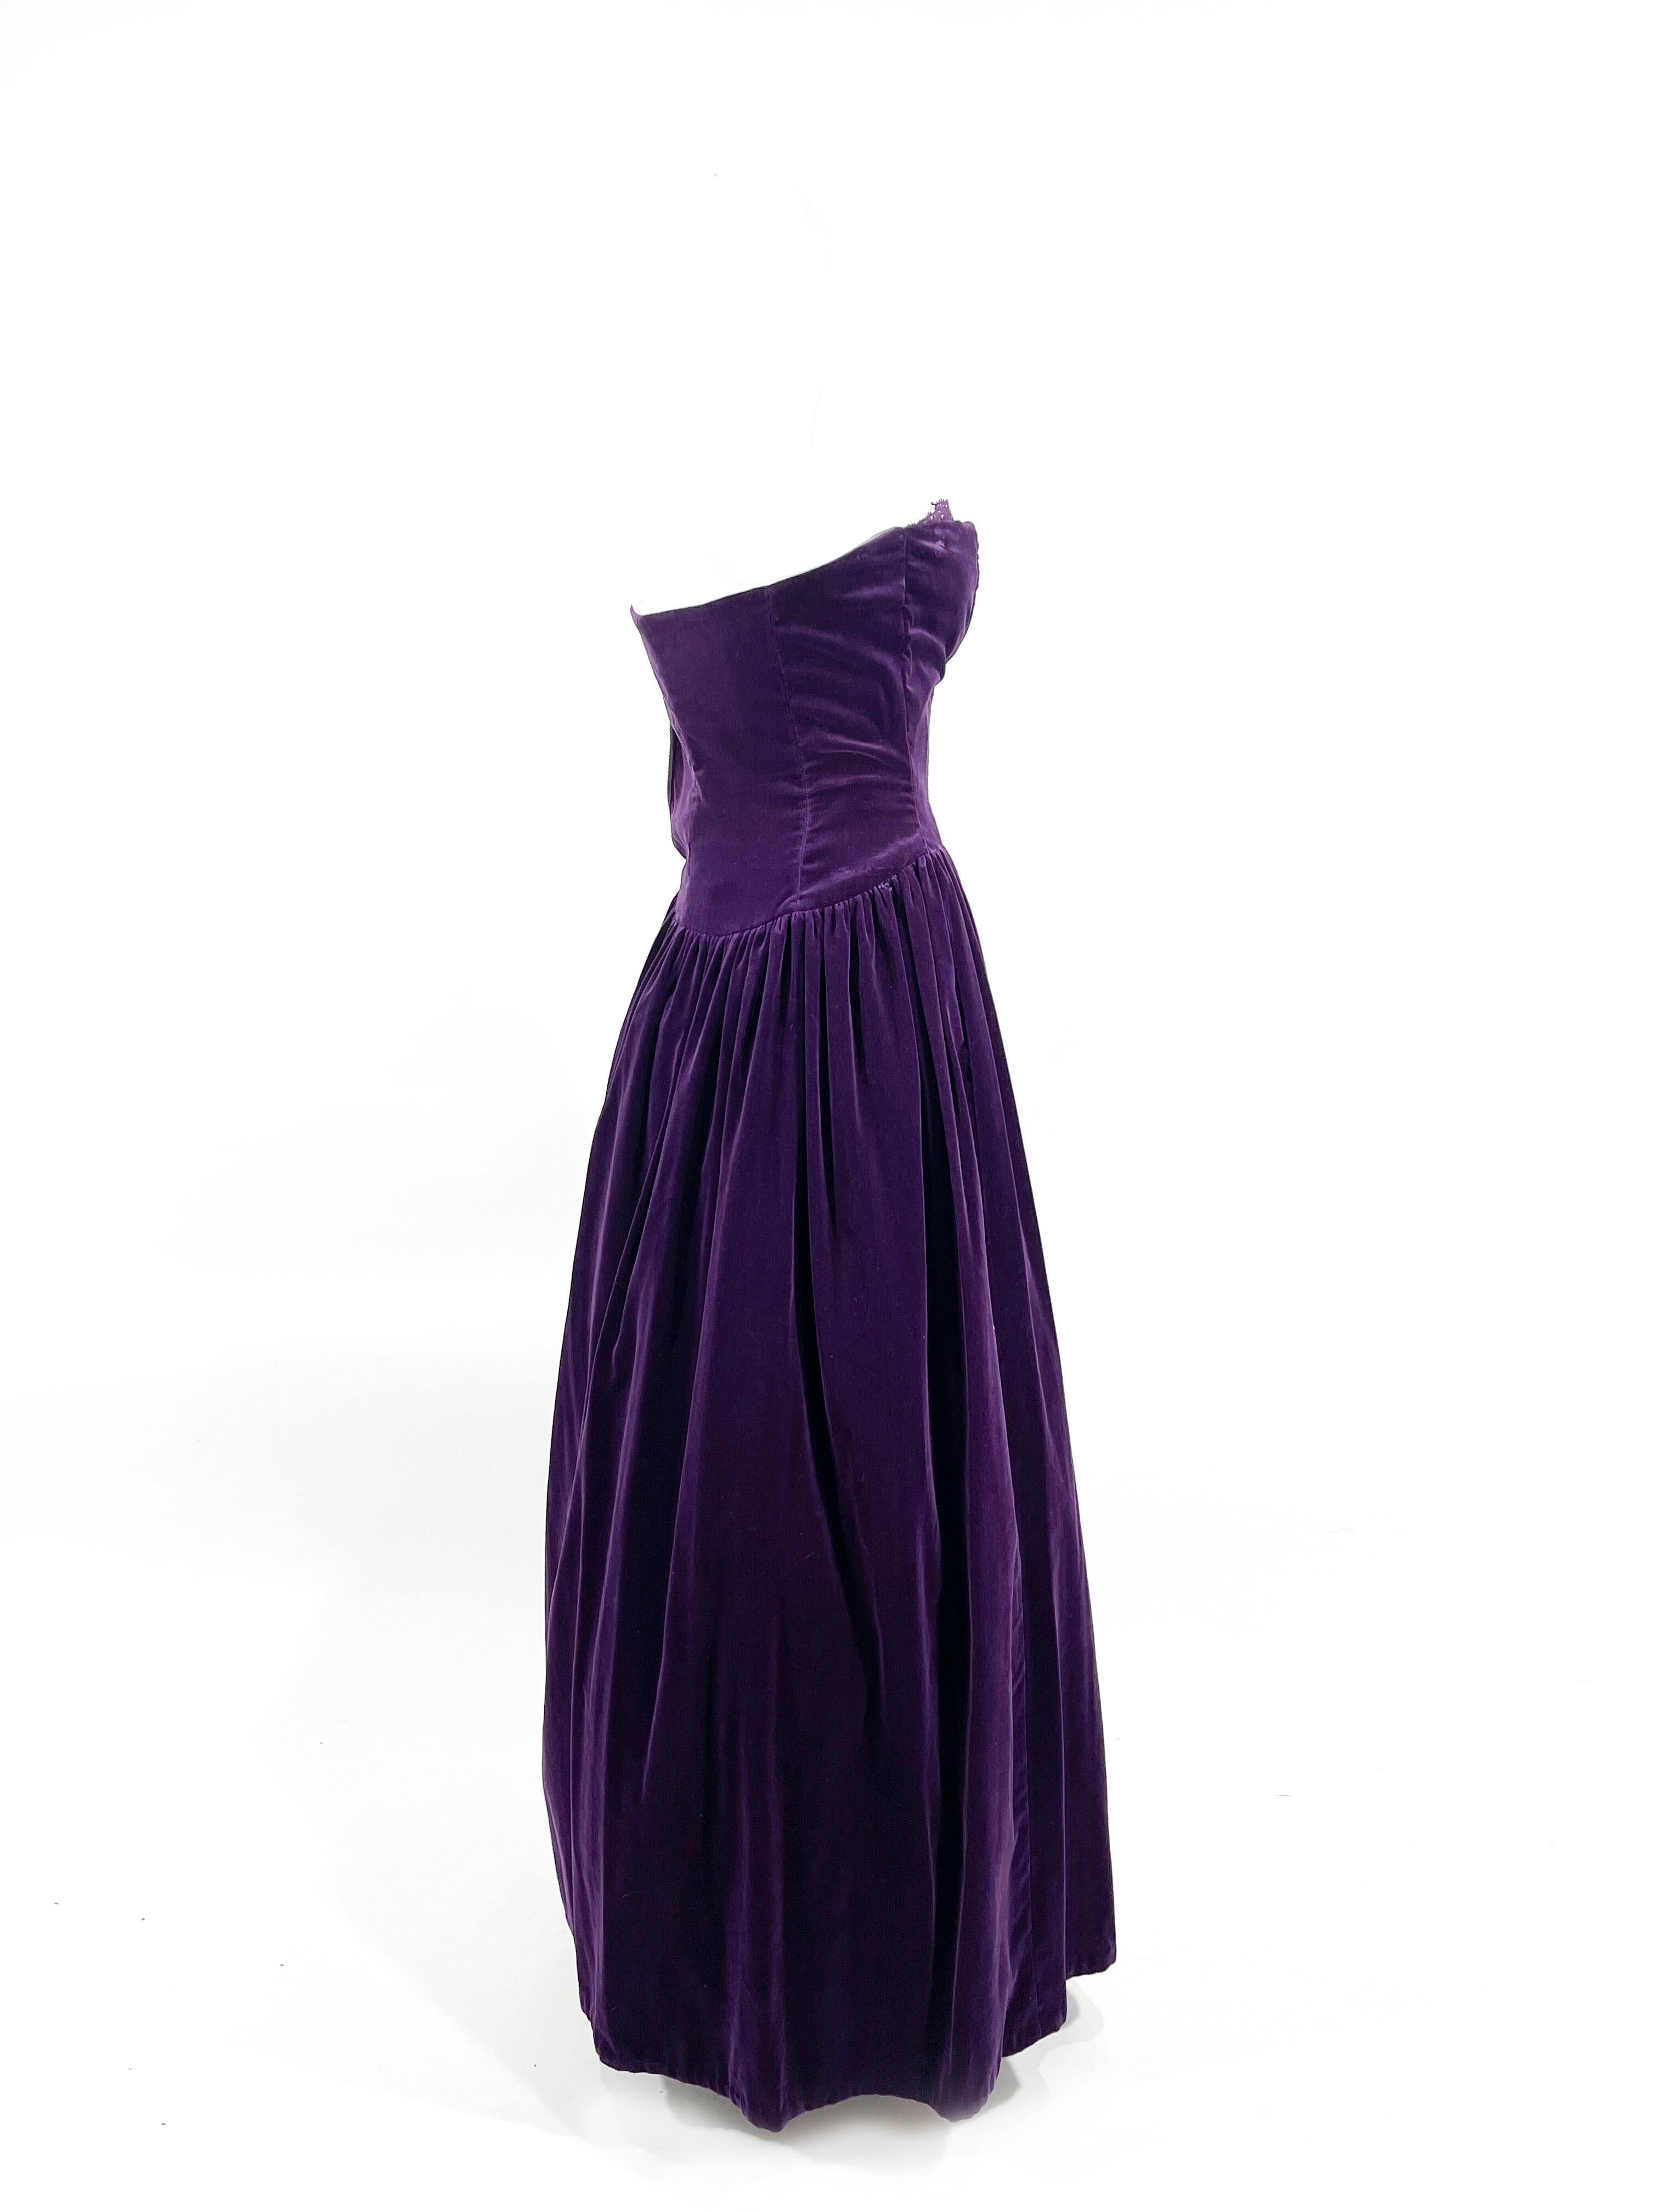 Women's 1950s Purple Velvet and Lace Party Dress